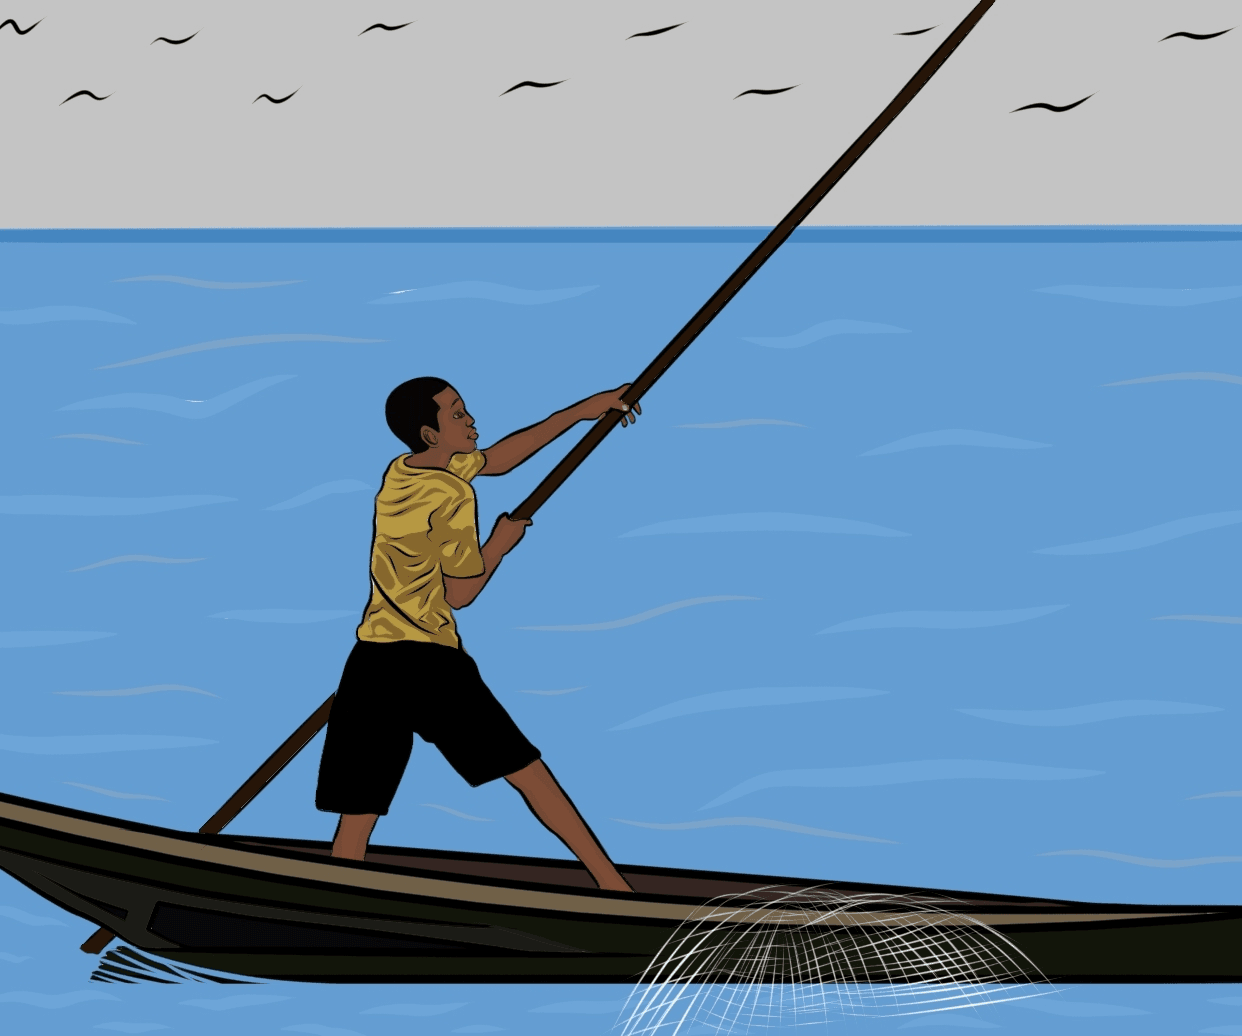 Fisherboy